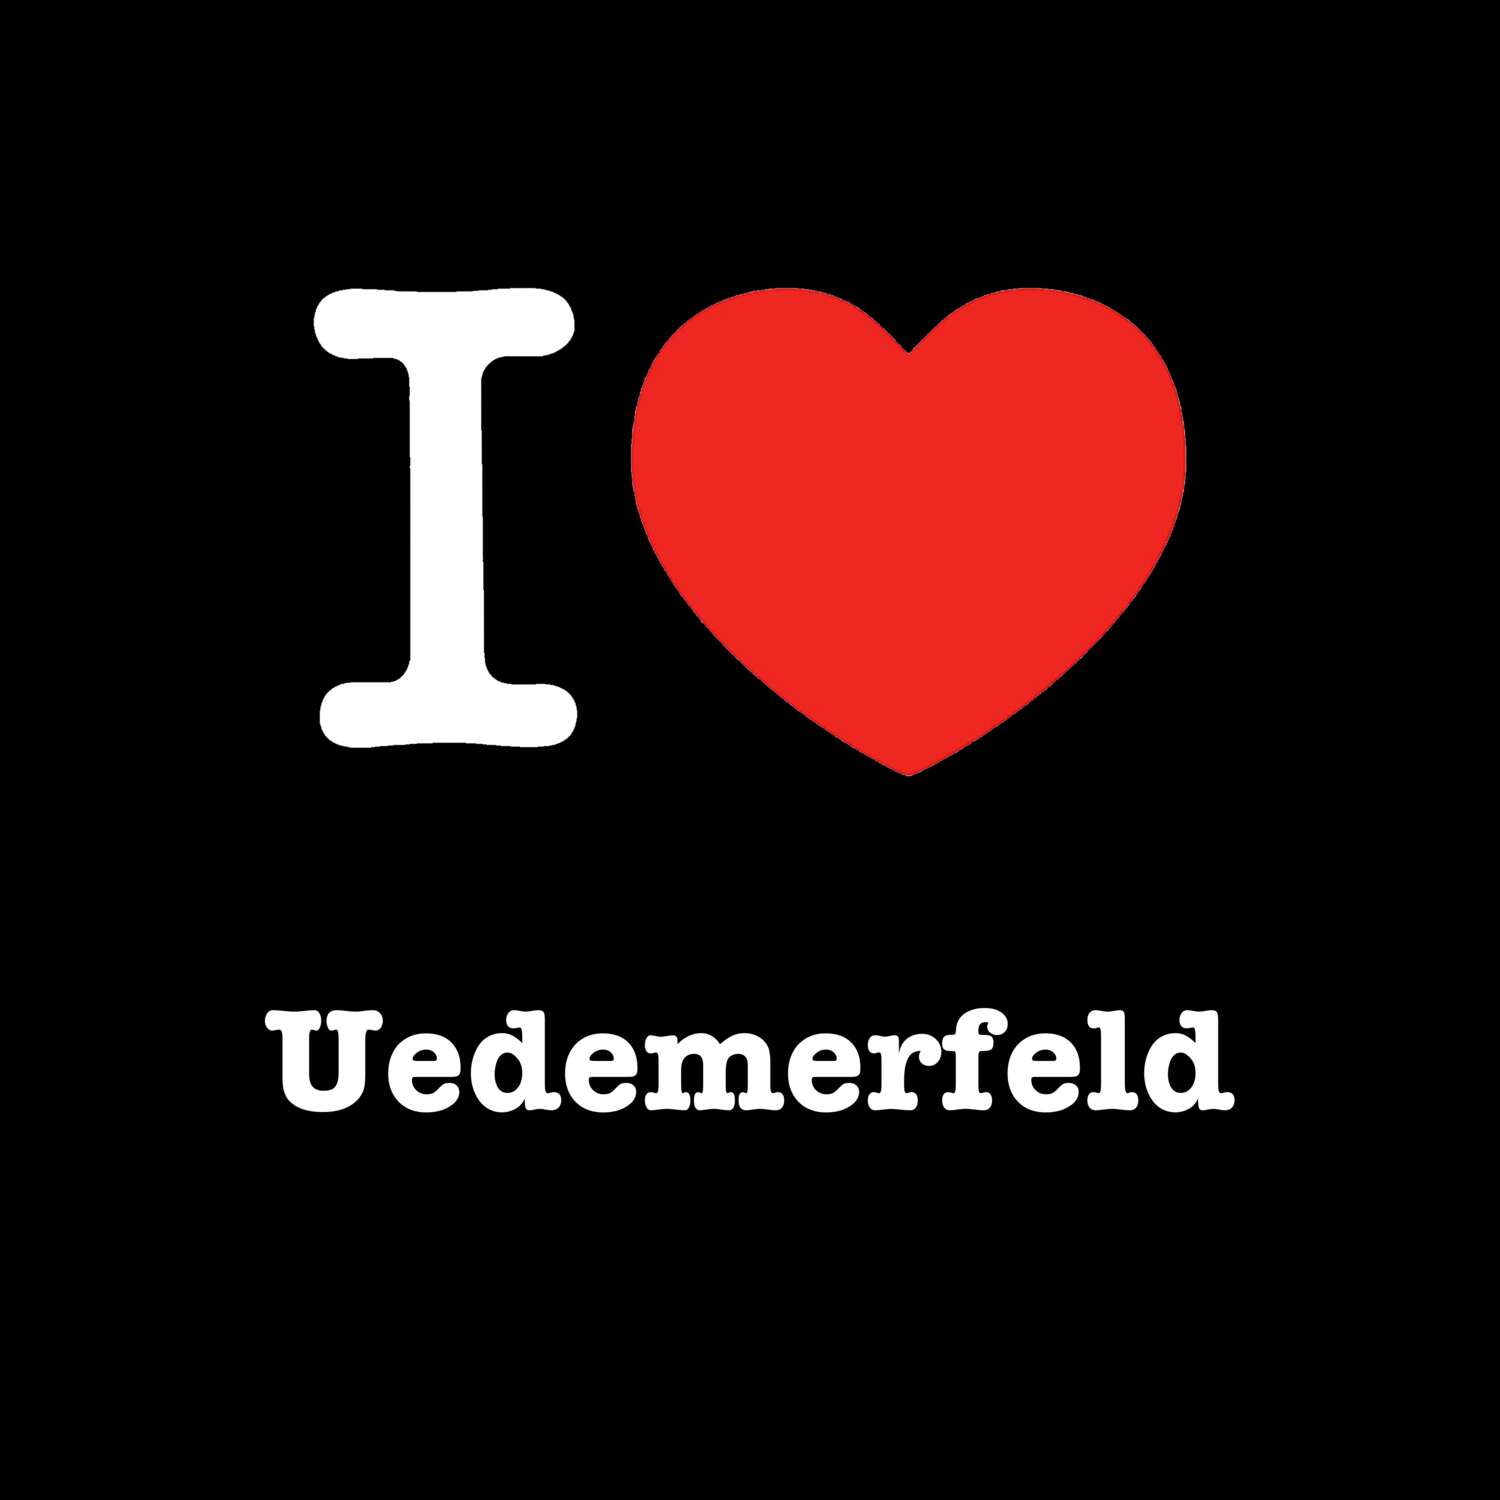 Uedemerfeld T-Shirt »I love«